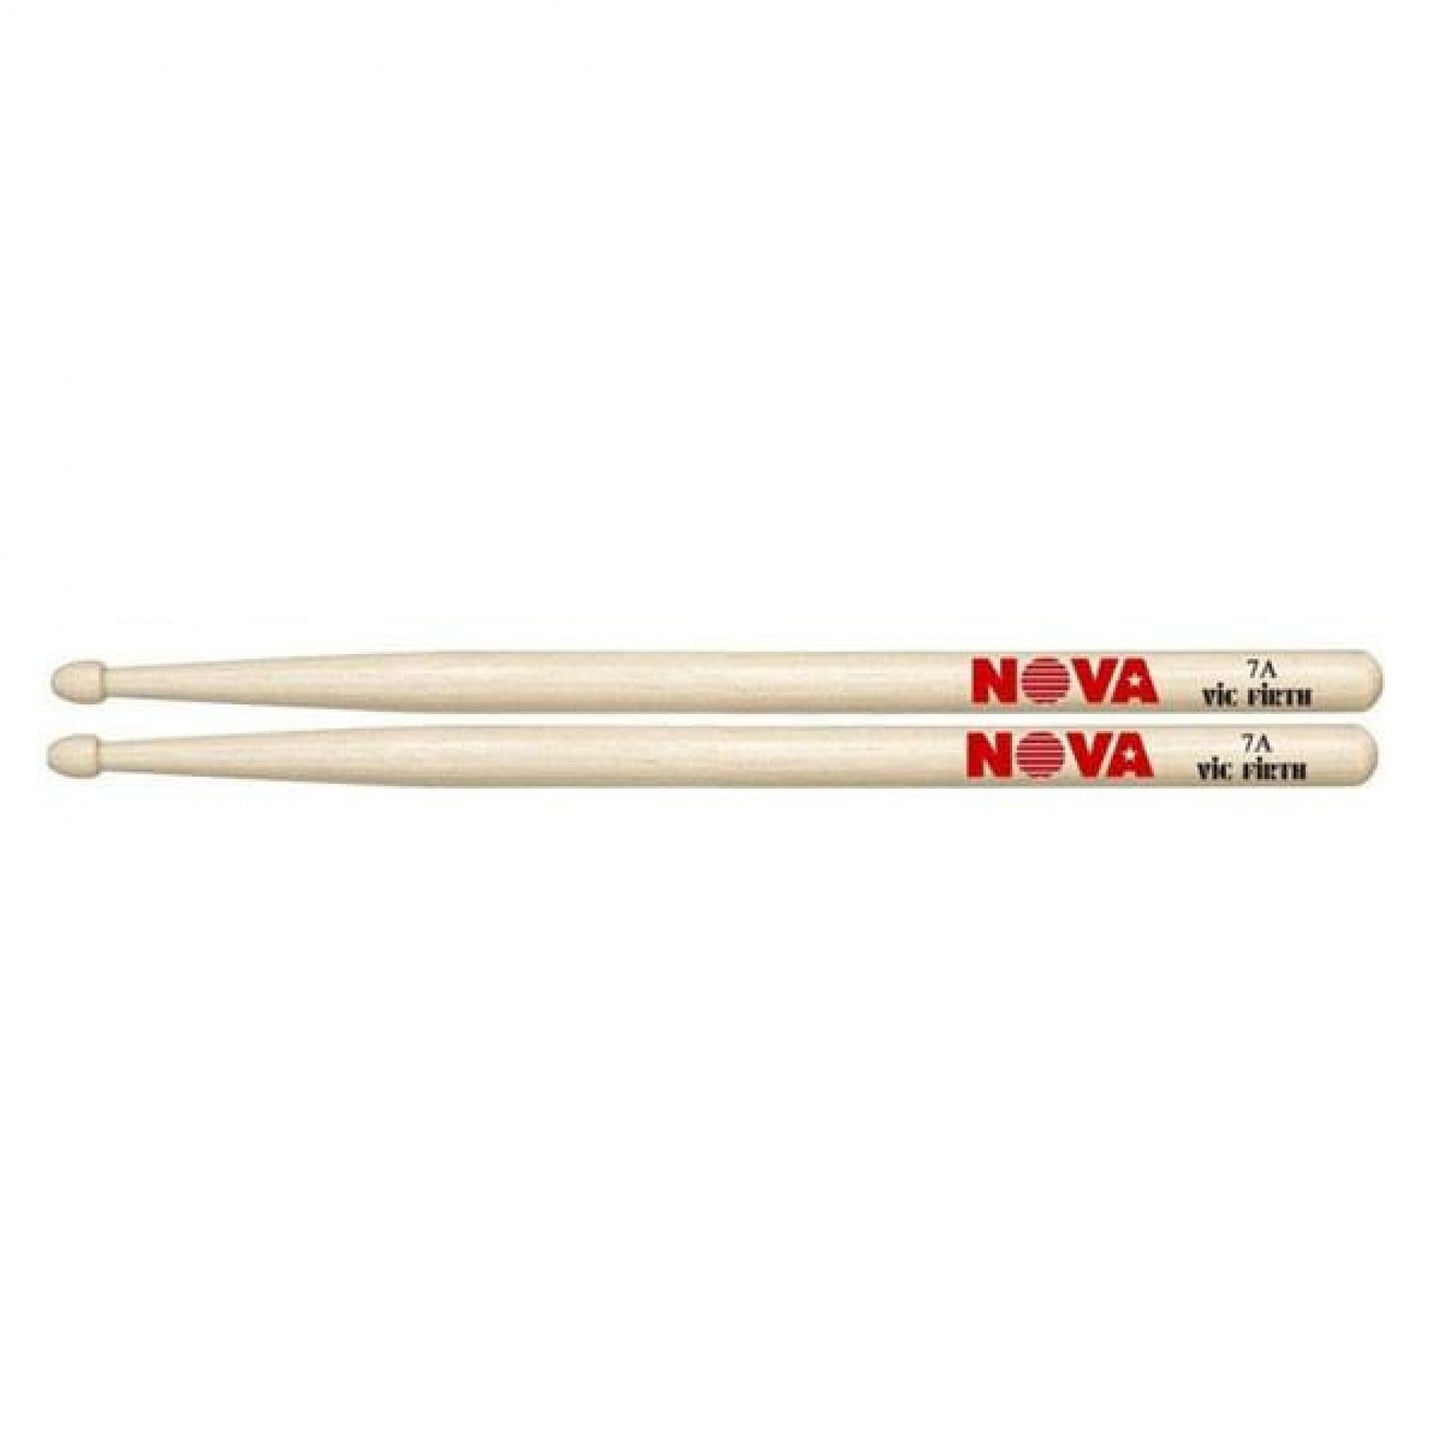 Vic Firth Nova N7A Wood Drum Stick